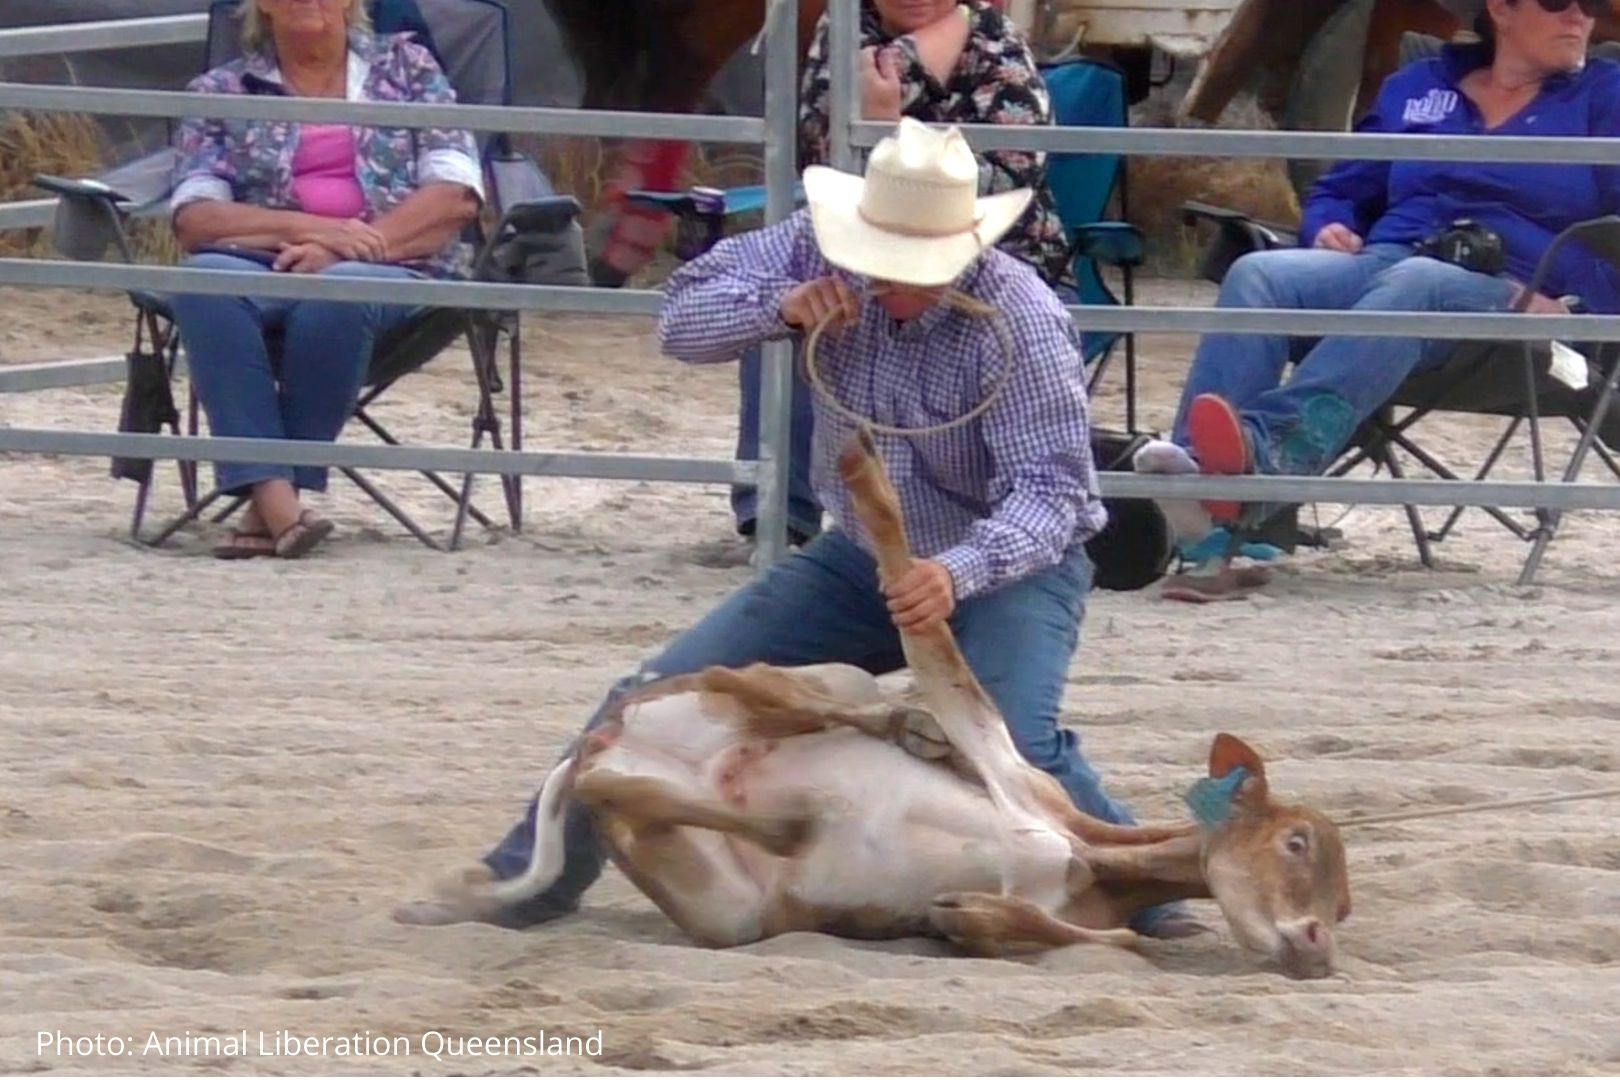 A man pins a calf to the ground.